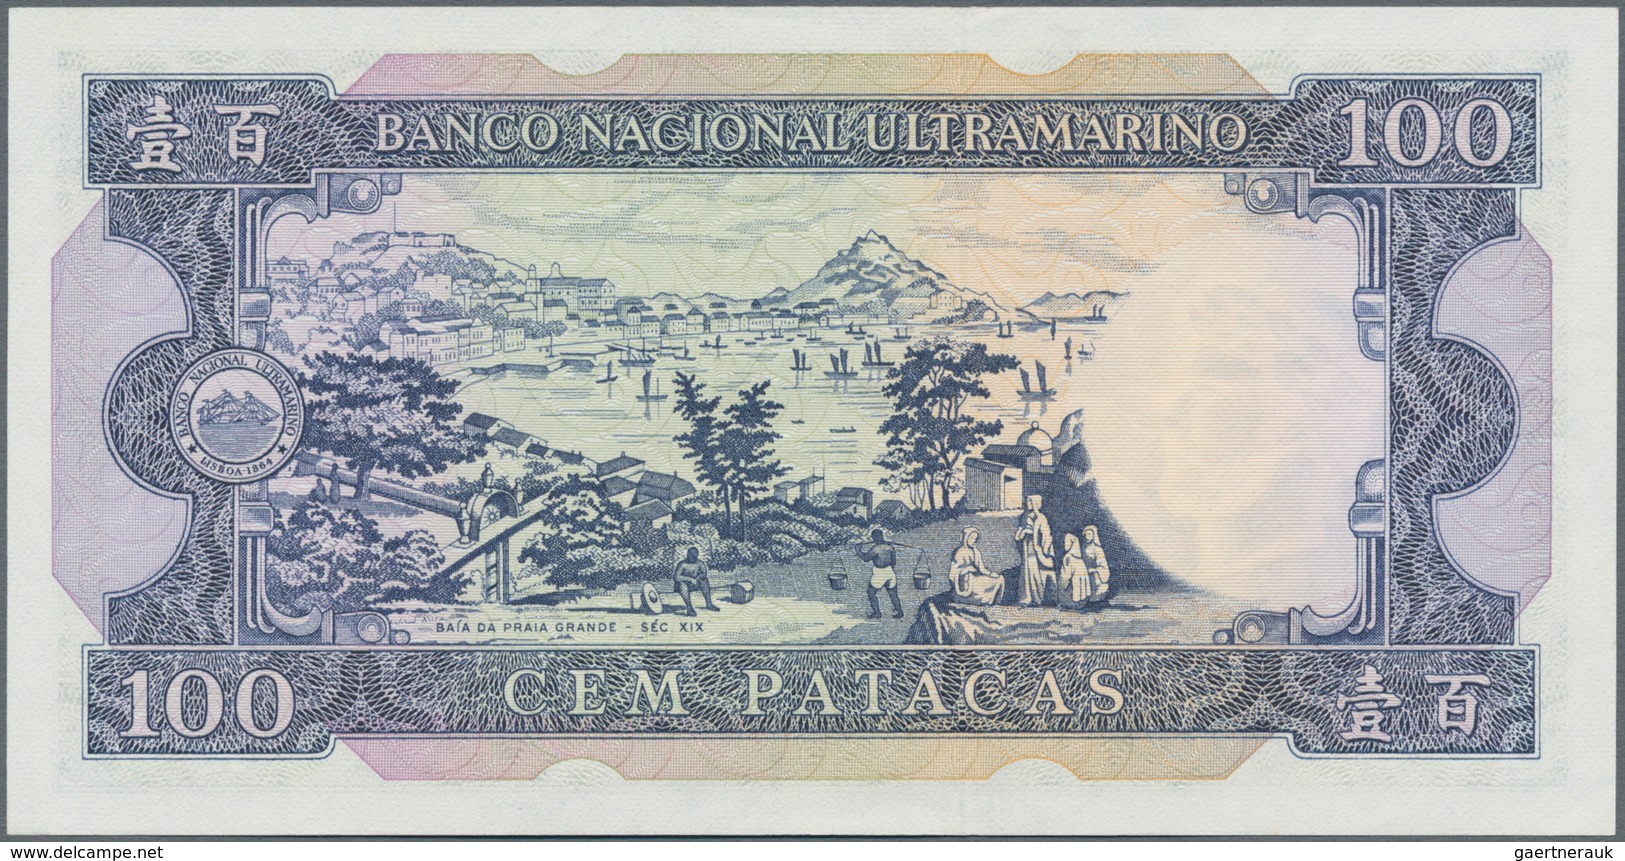 Macau / Macao: Banco Nacional Ultramarino 100 Patacas 1981, P.61b, Very Soft Bend At Center, Otherwi - Macao